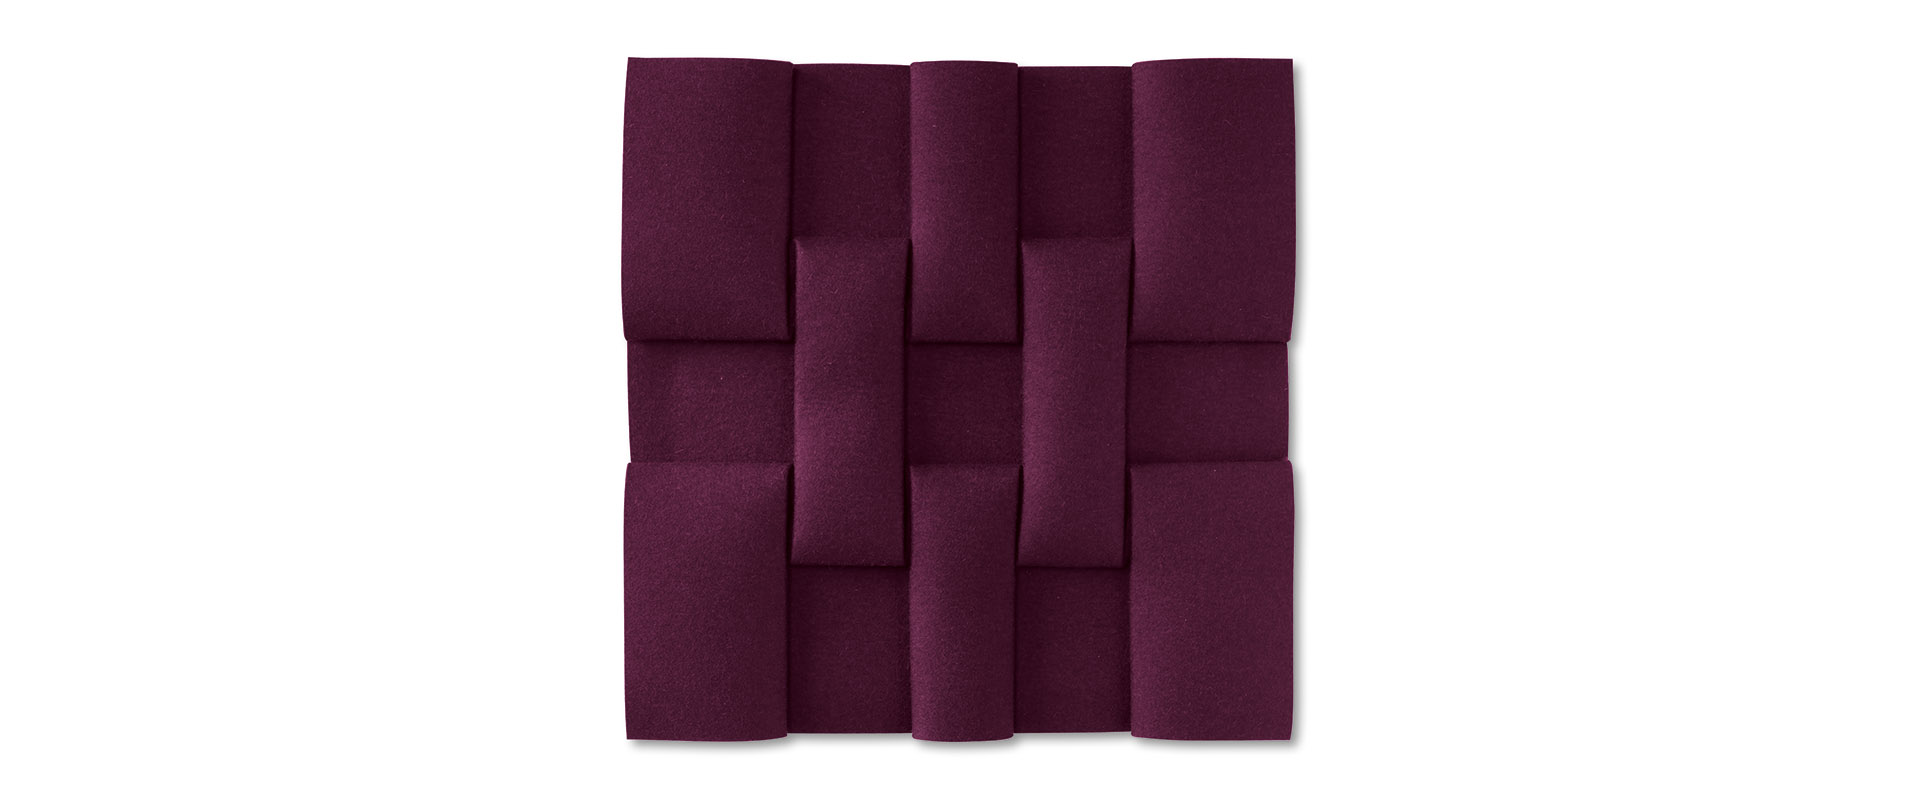 7 Quadrate (Rückseite) – 2019, Filz violett gefaltet, 54 x 54 cm